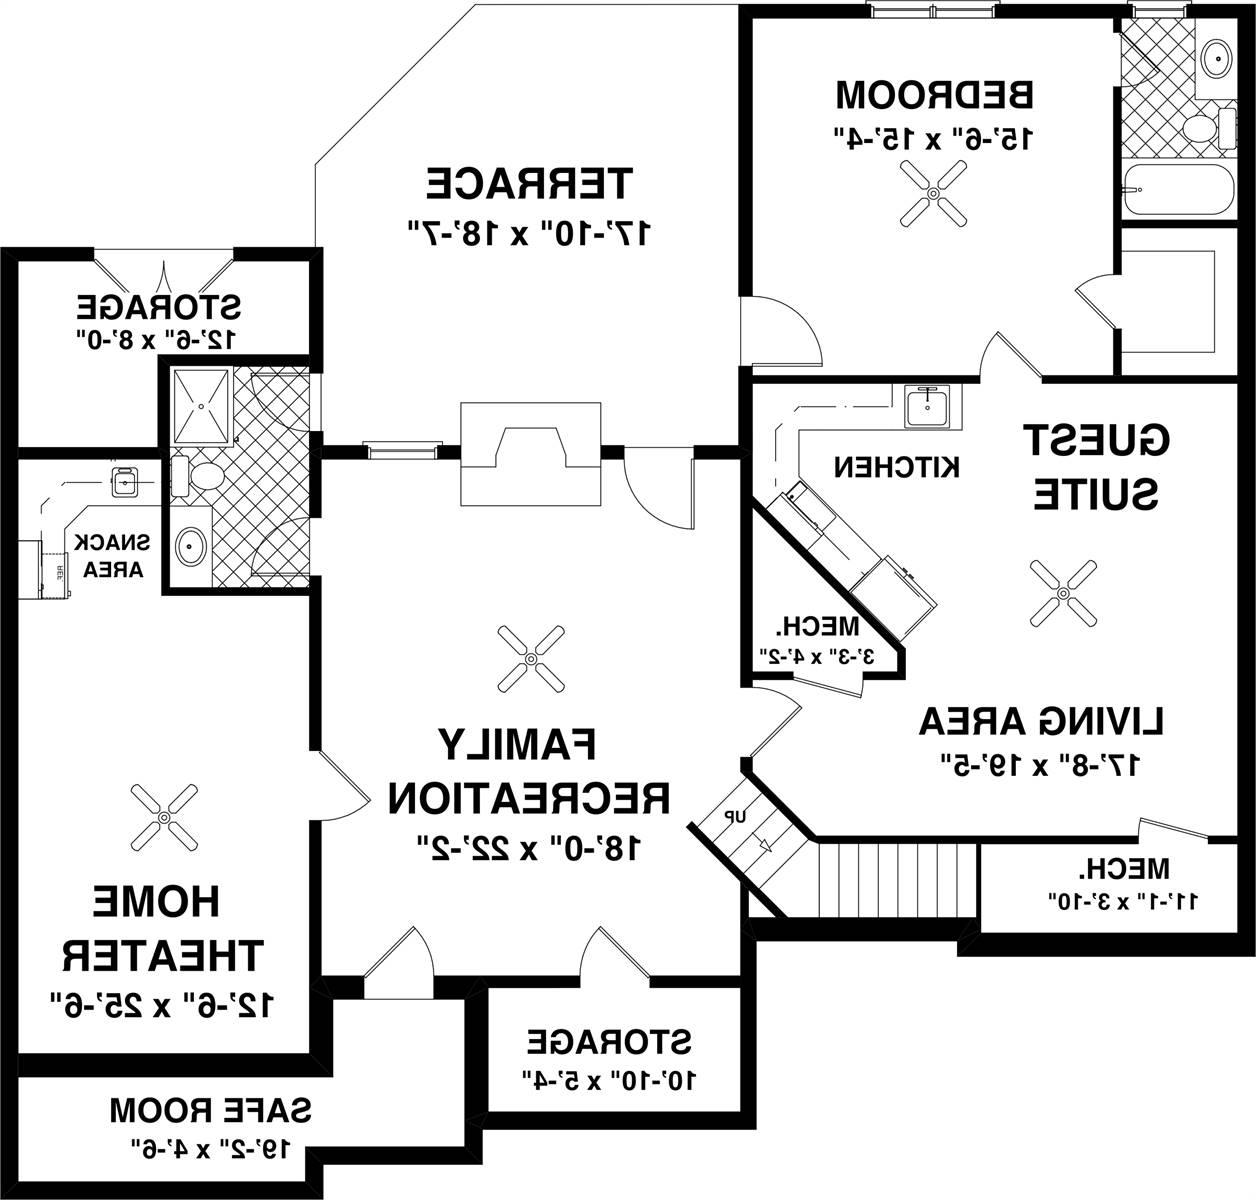 Optional Basement Plan image of The Falls Church House Plan